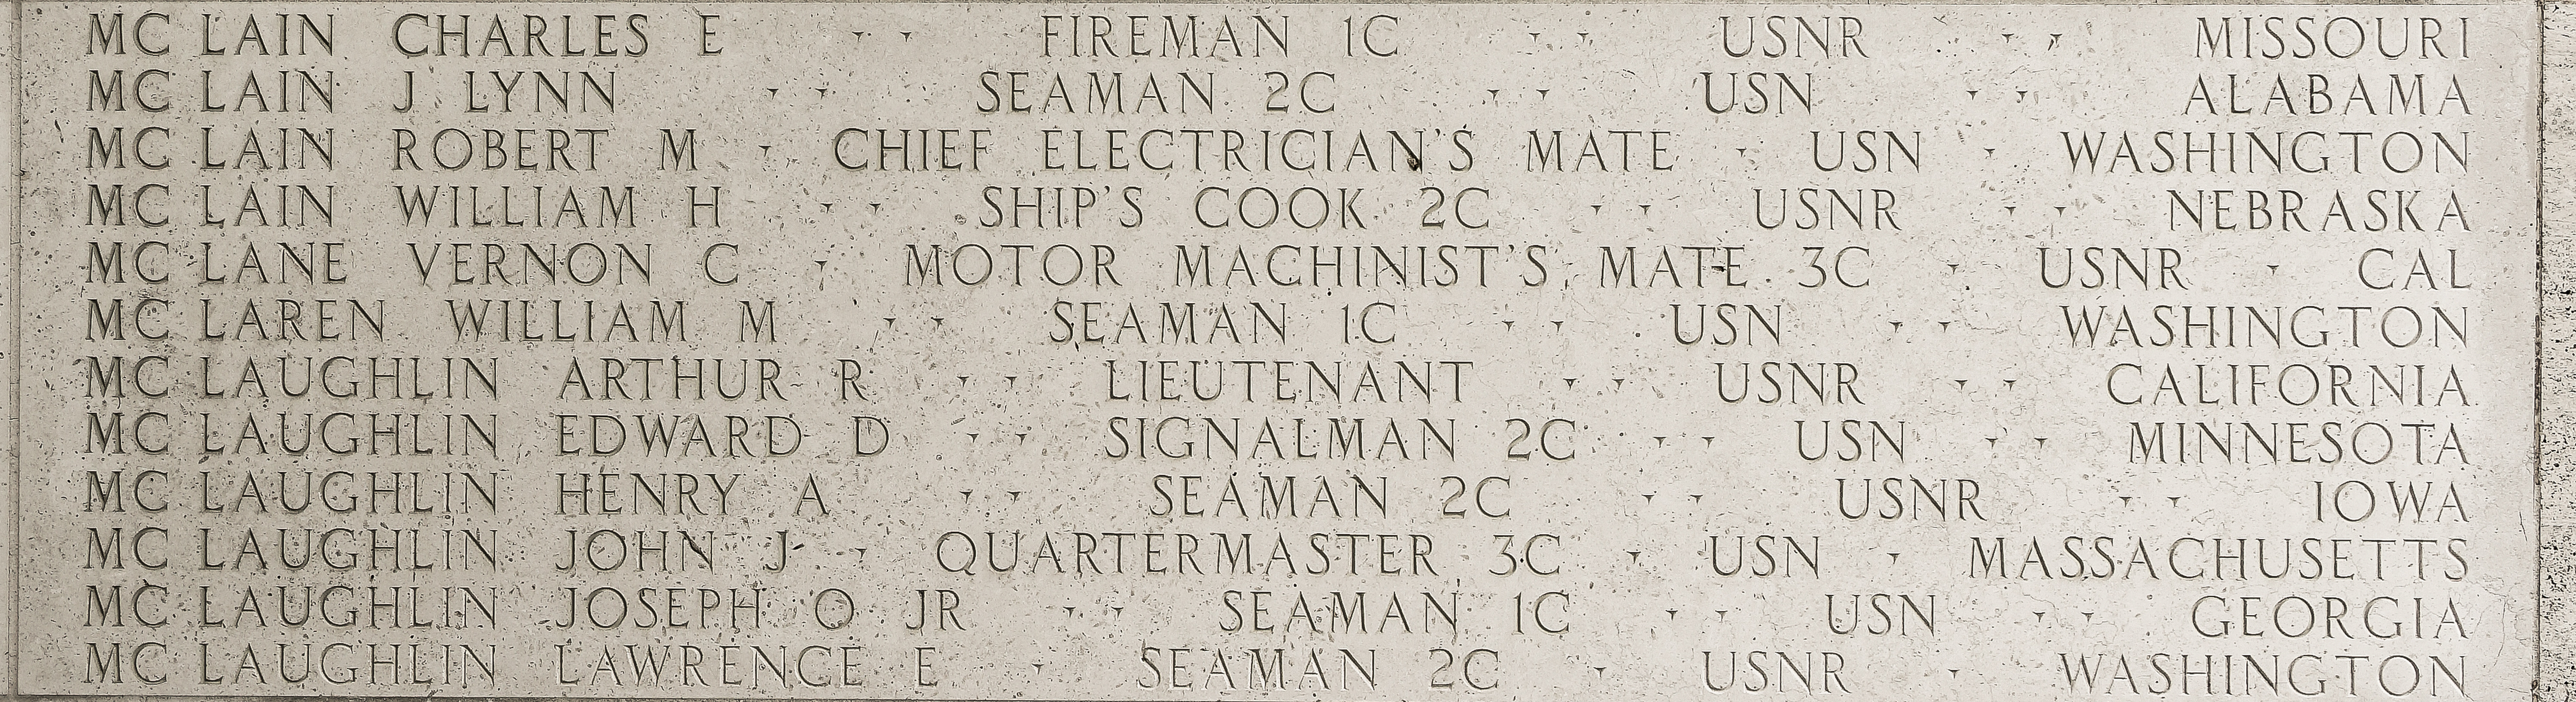 William H. McLain, Ship's Cook Second Class